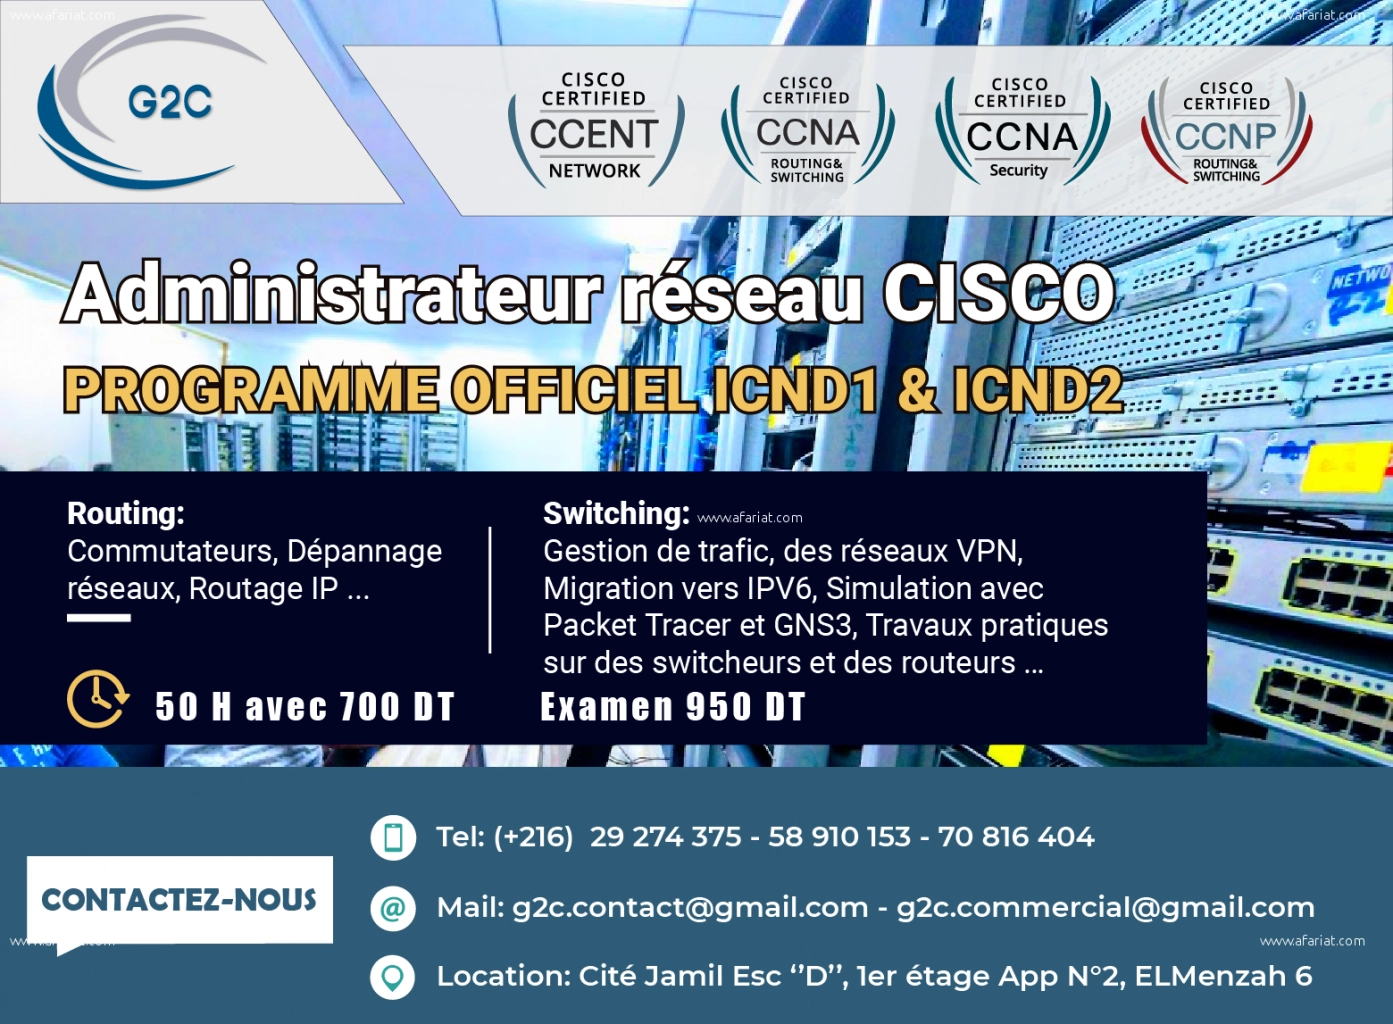 Formations et certification Cisco CCNA :